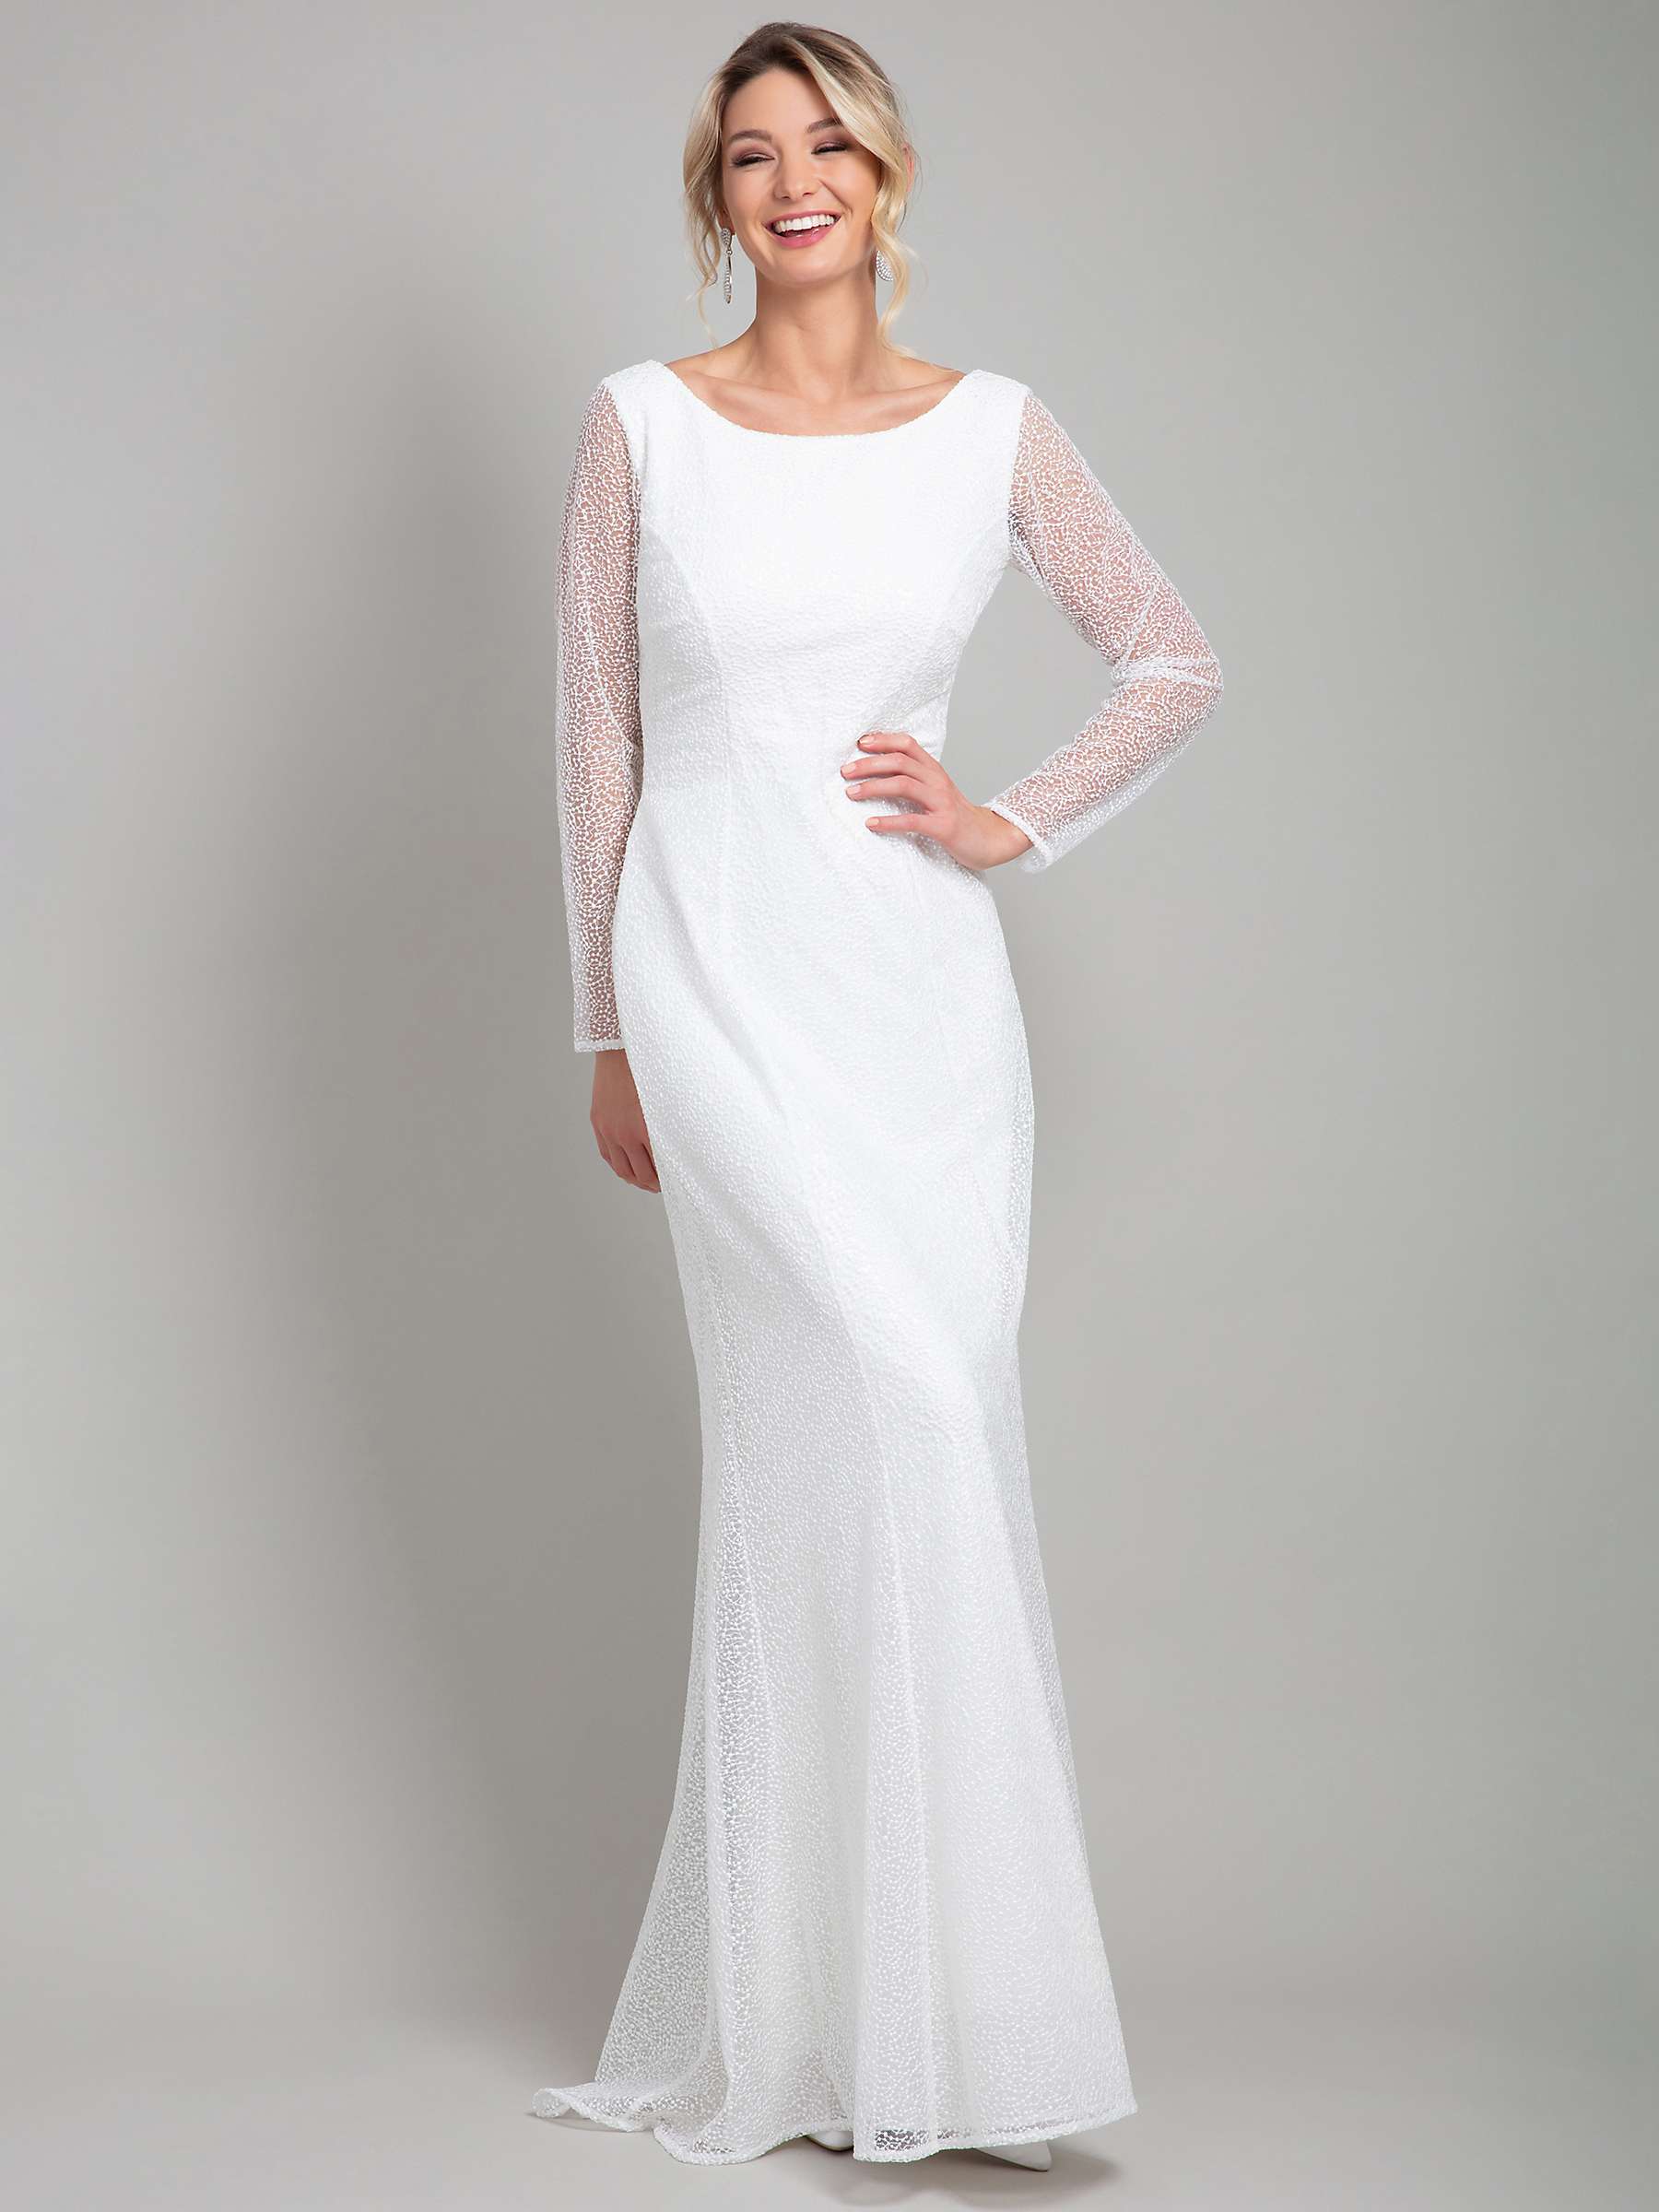 Buy Alie Street Iris Sparkle Wedding Gown, White Online at johnlewis.com